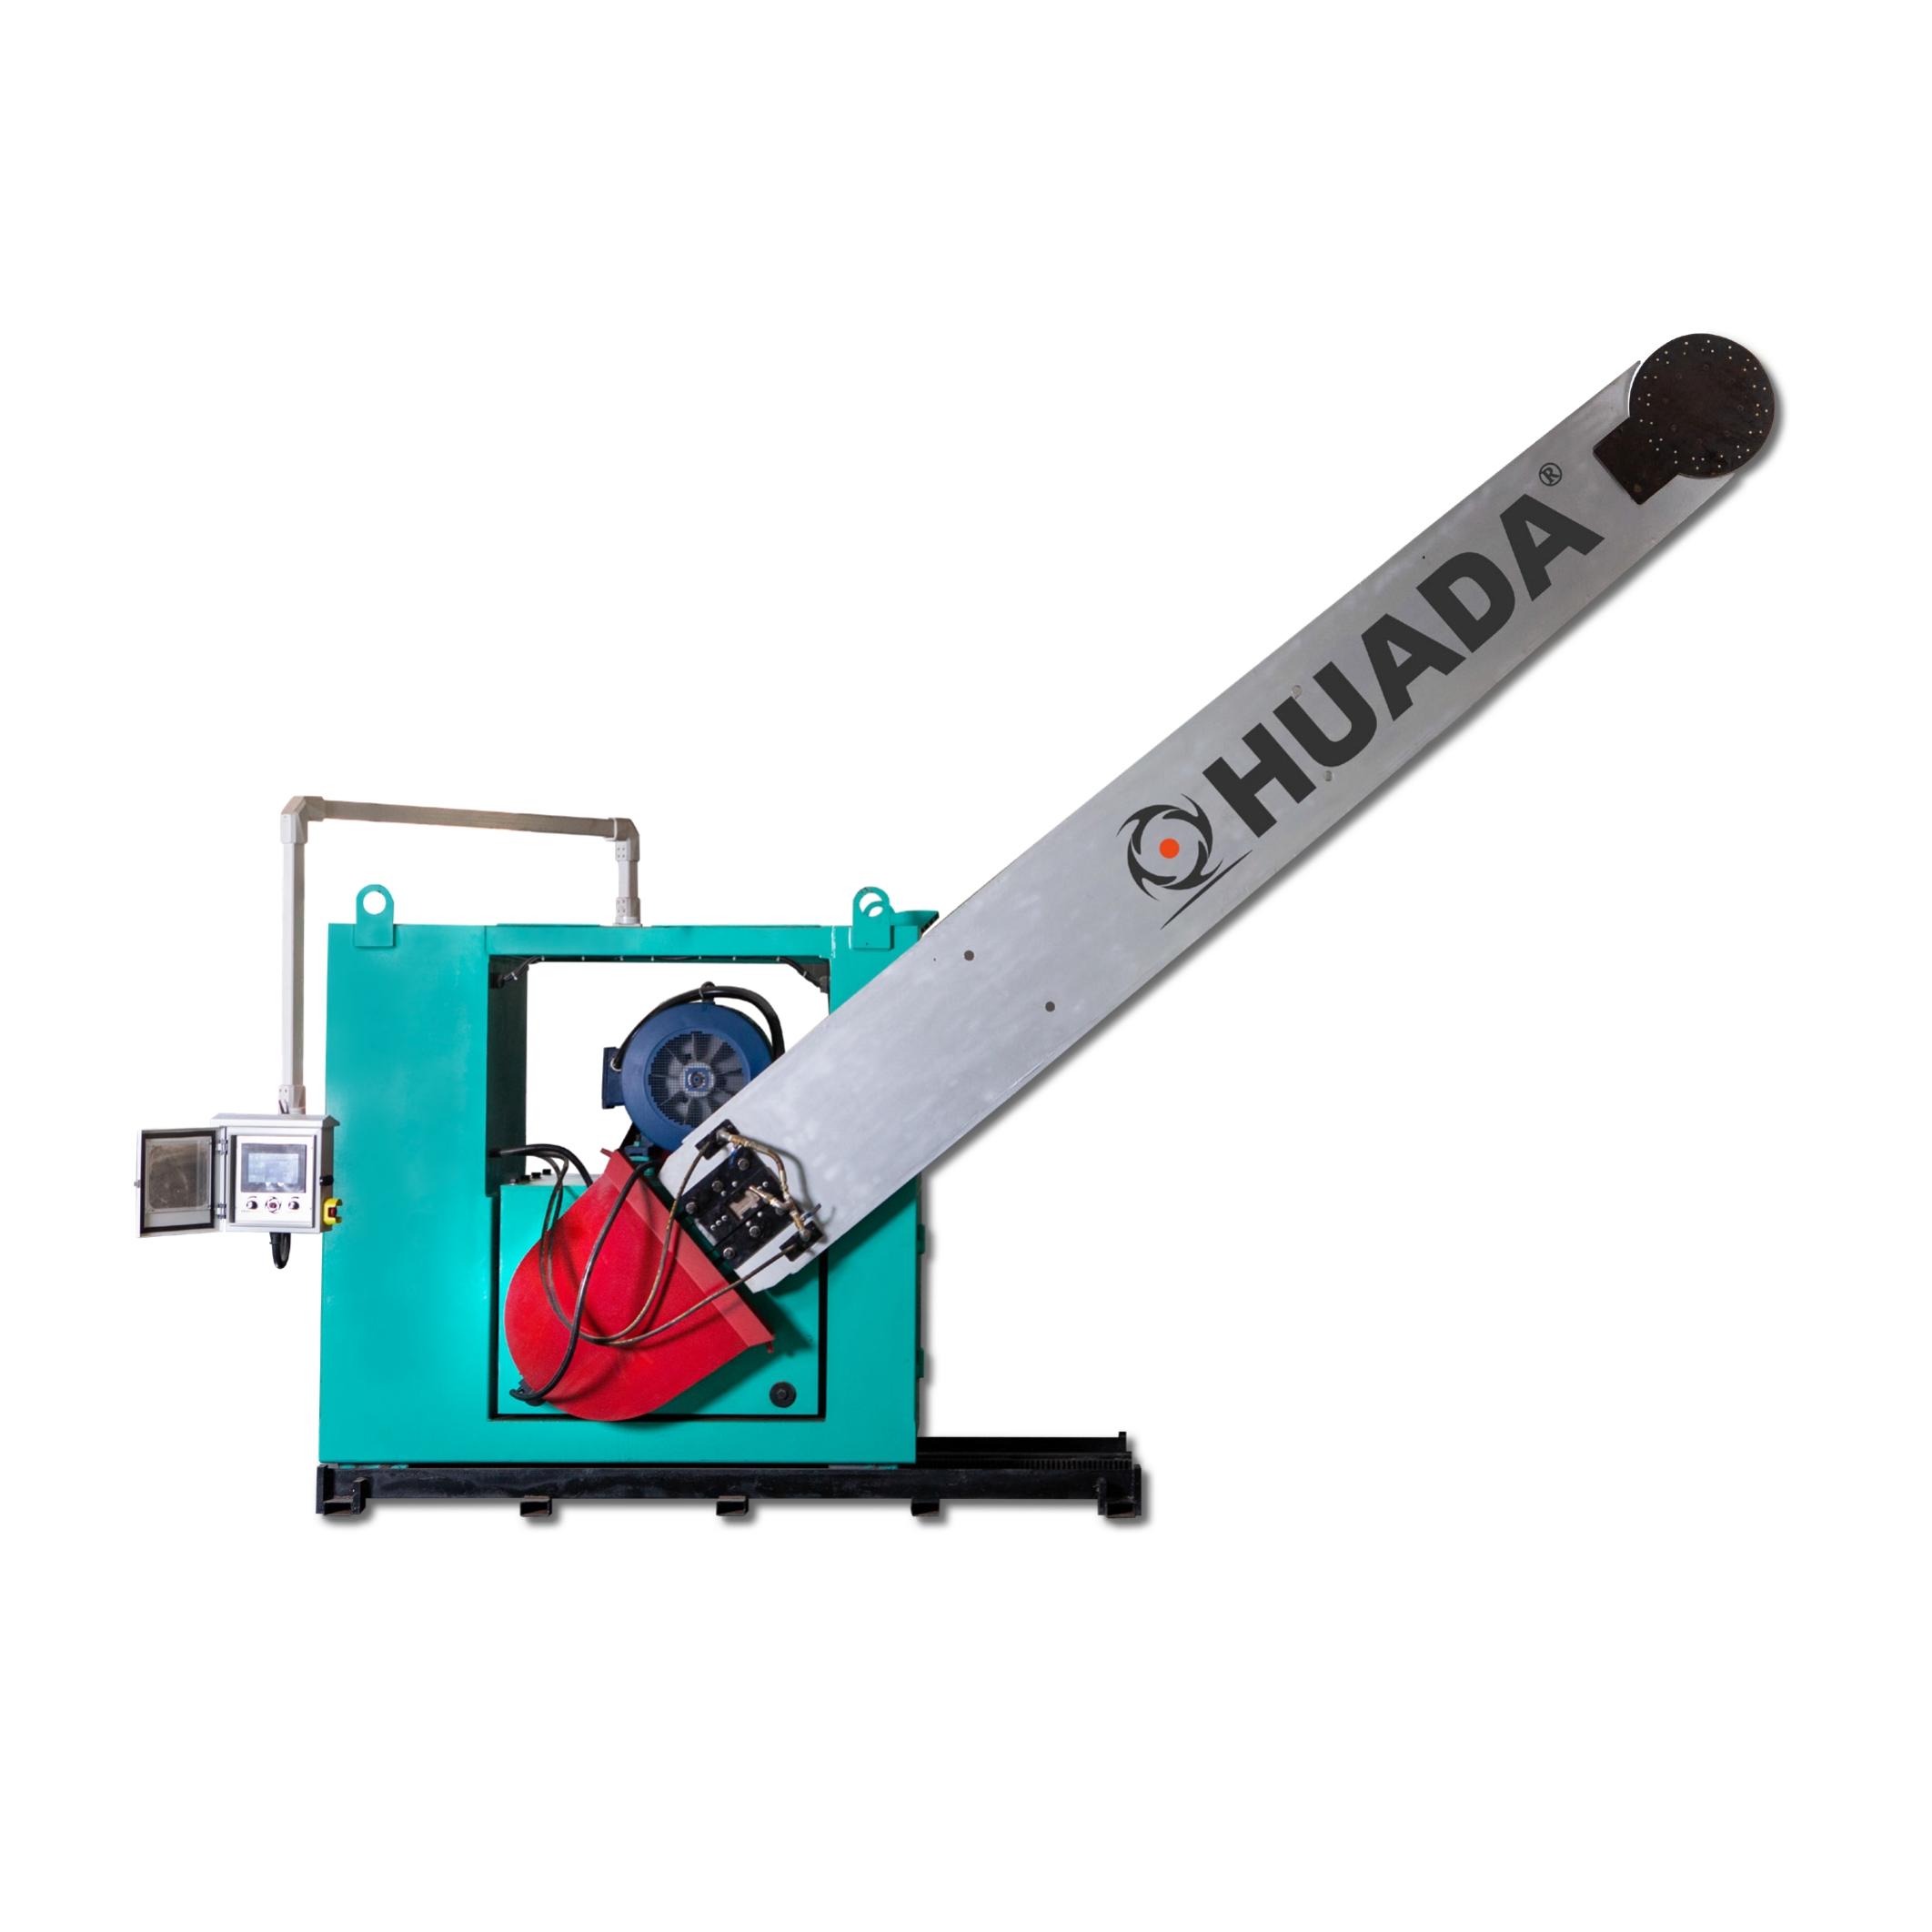 Huada chain saw machine for marble mining video